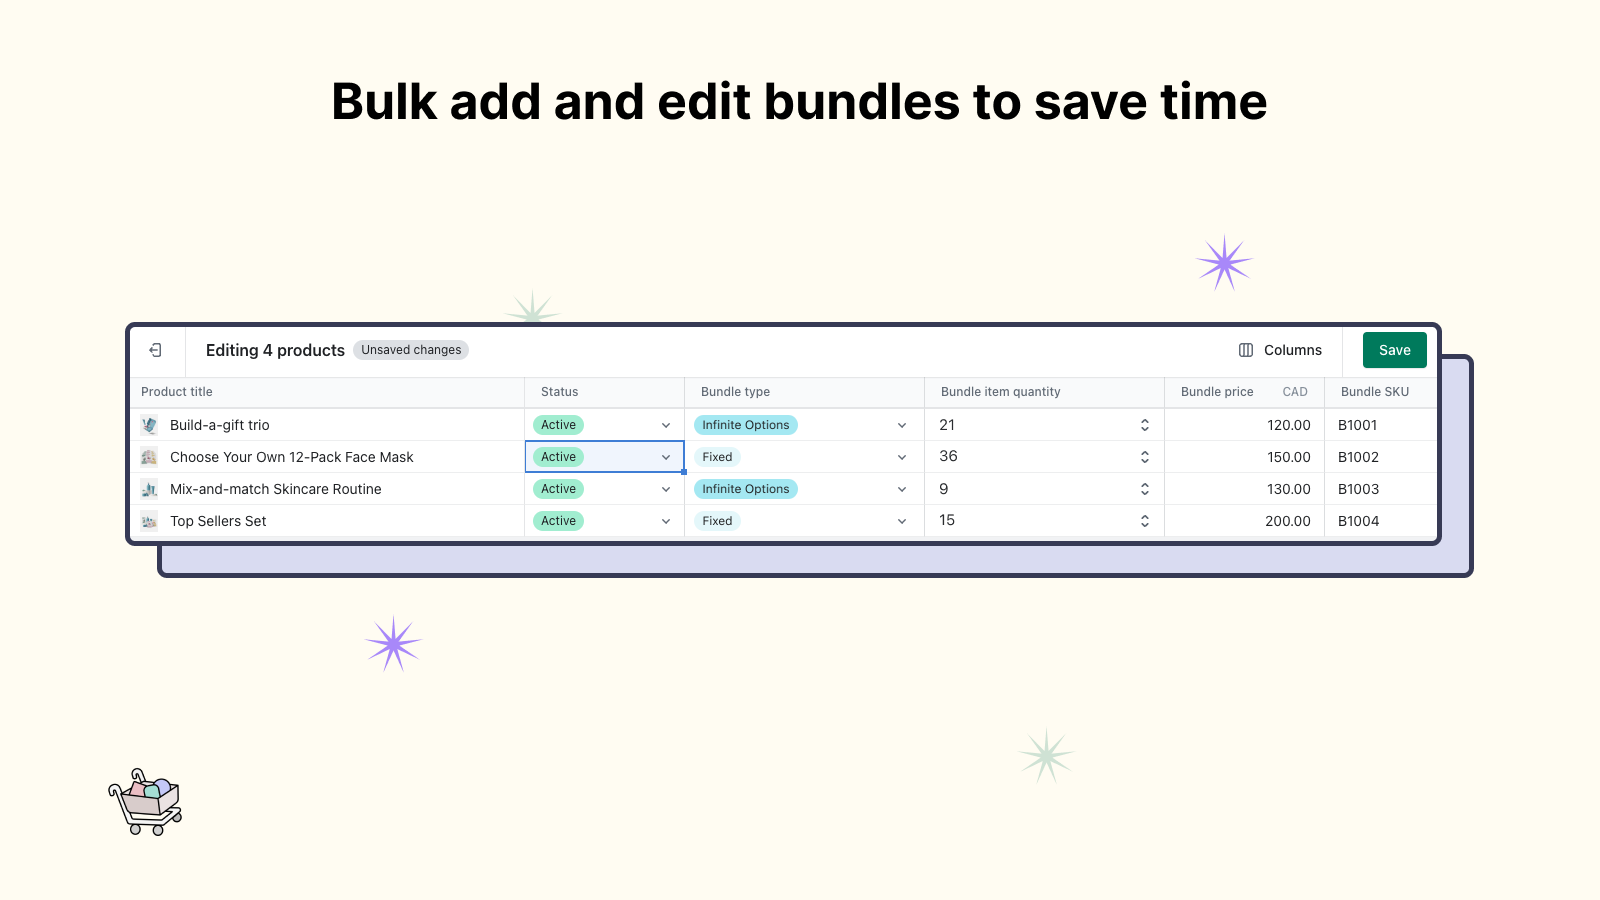 Bulk add and edit bundles to save time